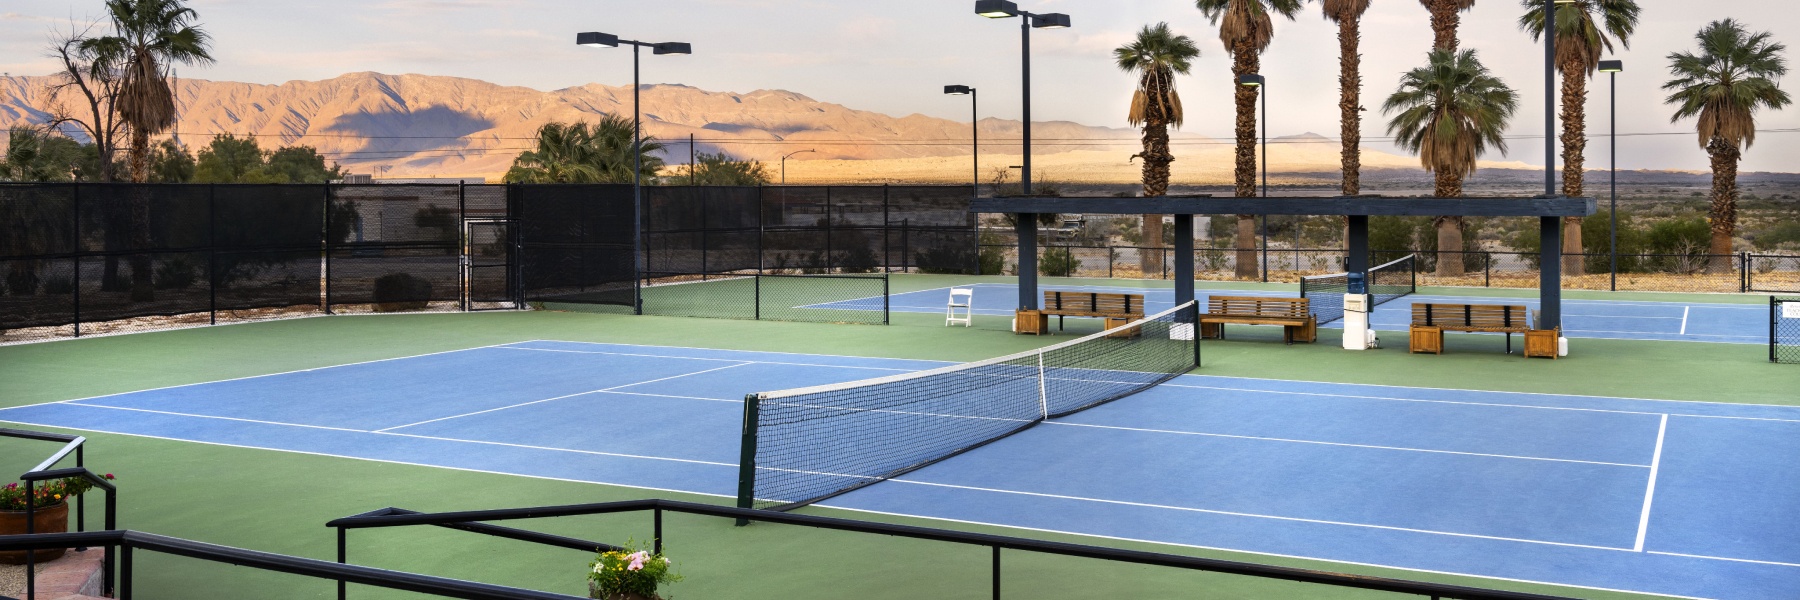 Tennis at La Casa Del Zorro Resort & Spa, Borrego Springs, California